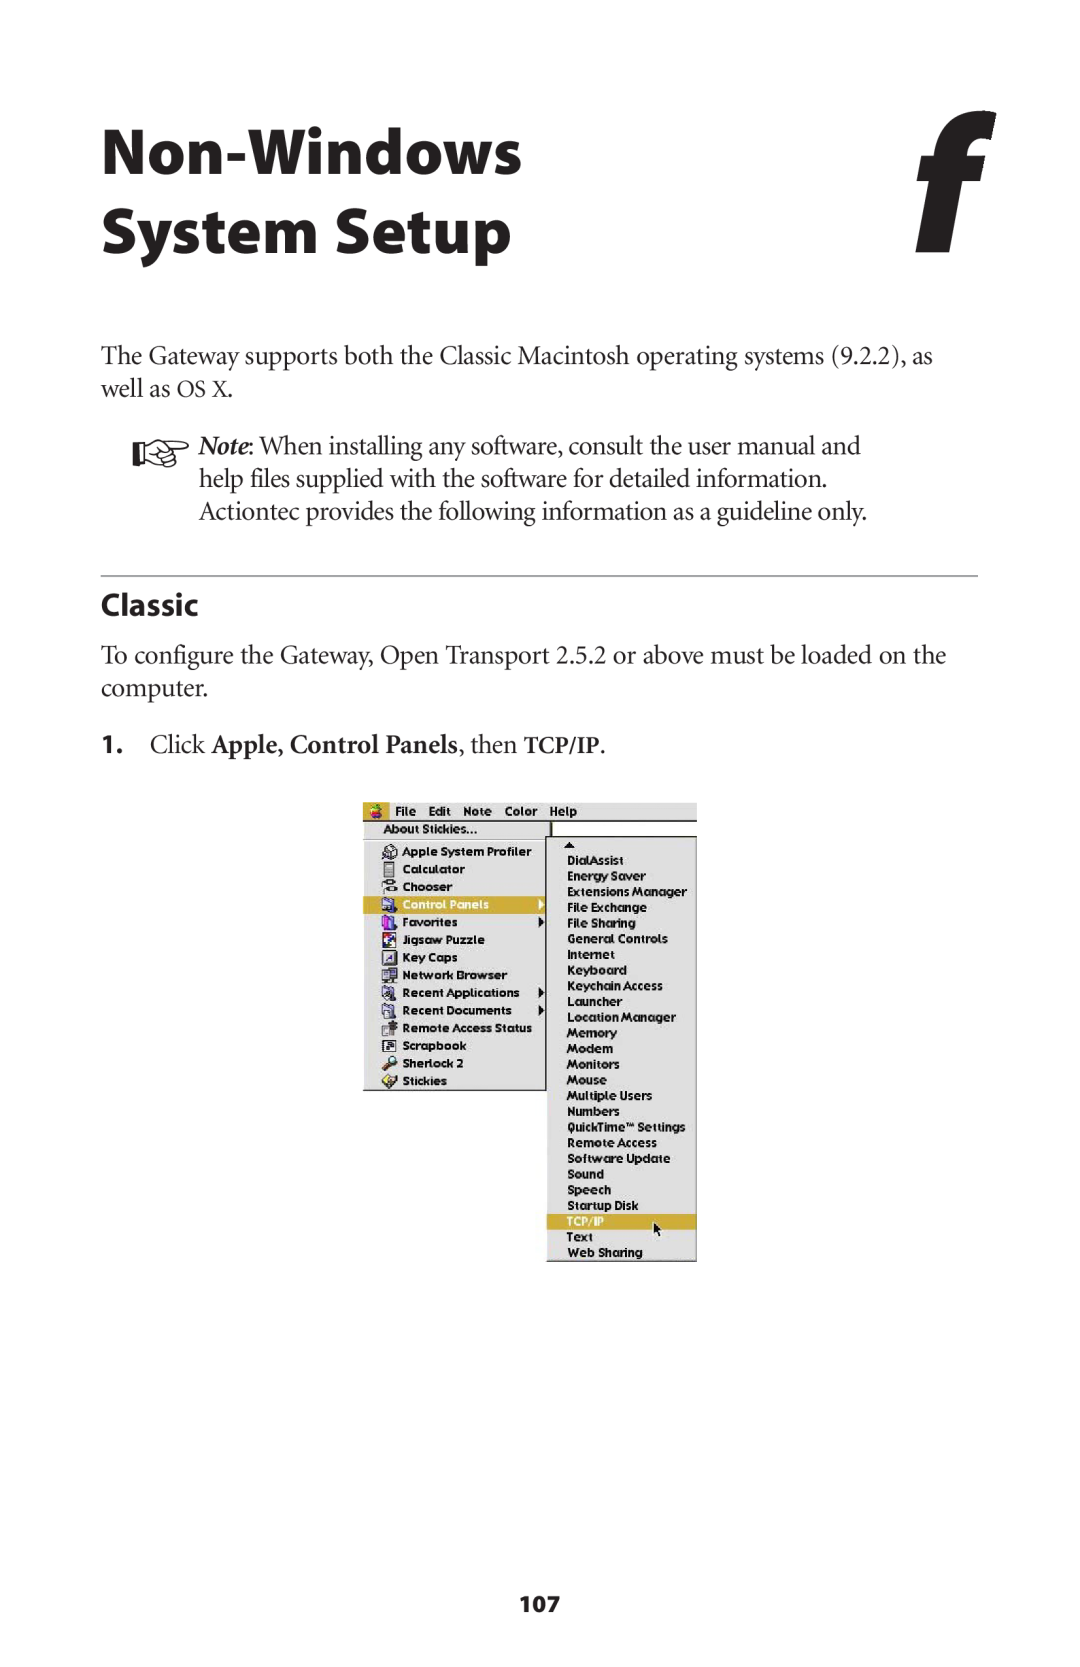 Gateway GT704 user manual Non-Windowsf System Setup, Classic 